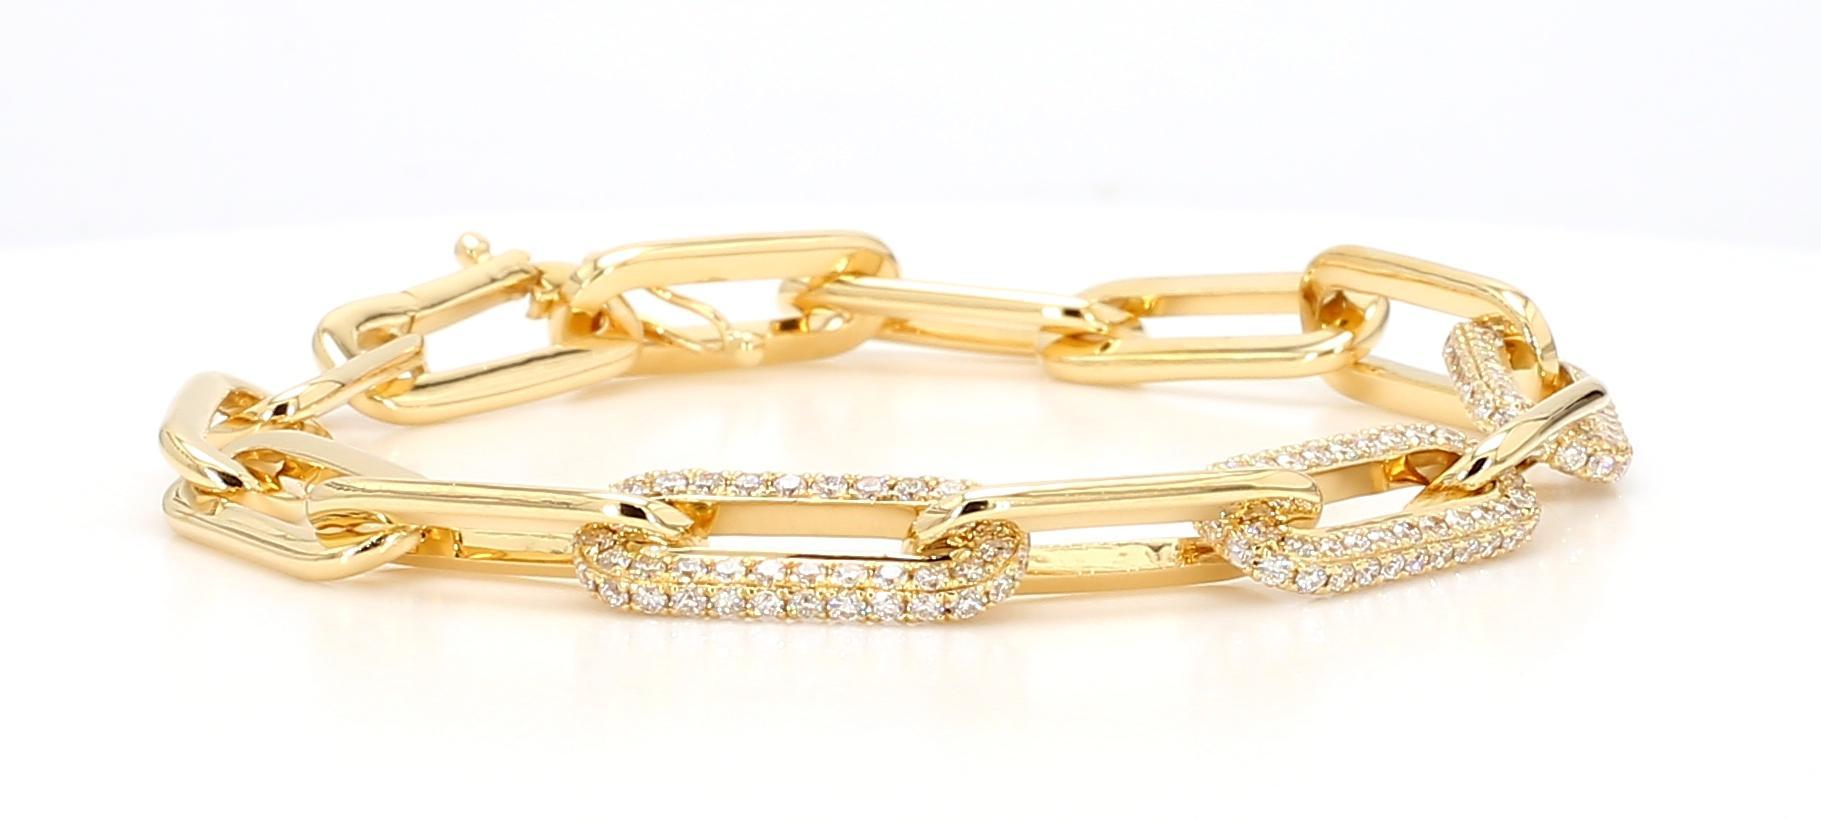 Natural White Round Diamond 2.01 Carat TW Yellow Gold Link Bracelet For Sale 3